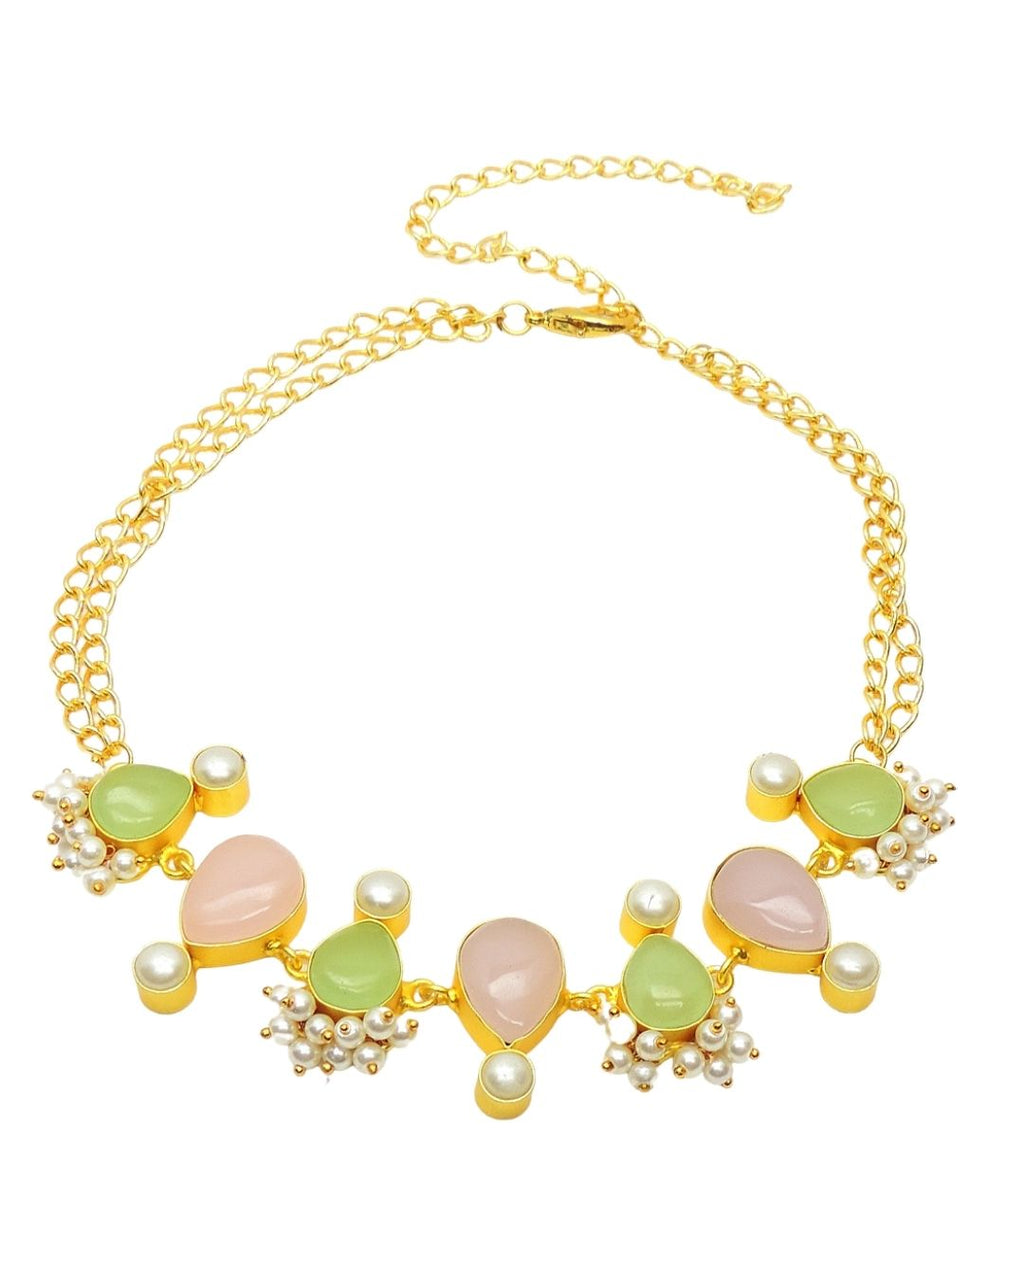 Sauda Necklace - Necklaces - Handcrafted Jewellery - Made in India - Dubai Jewellery, Fashion & Lifestyle - Dori